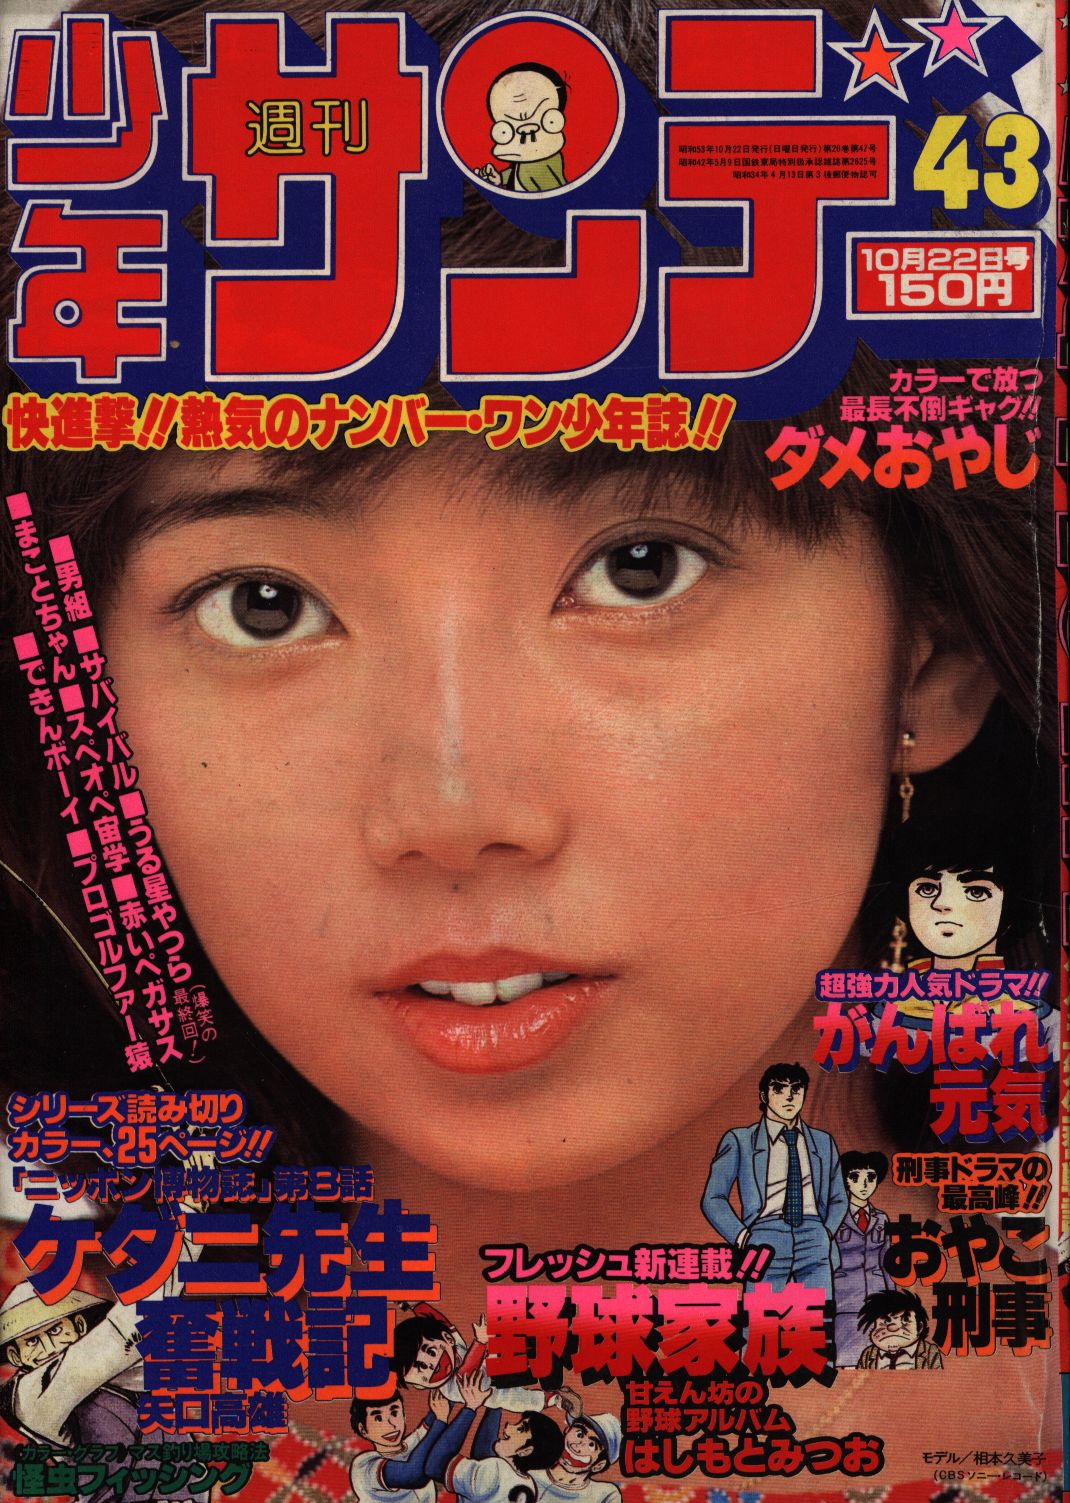 Weekly Shonen Sunday 1978 Showa 53 43 Mandarake Online Shop